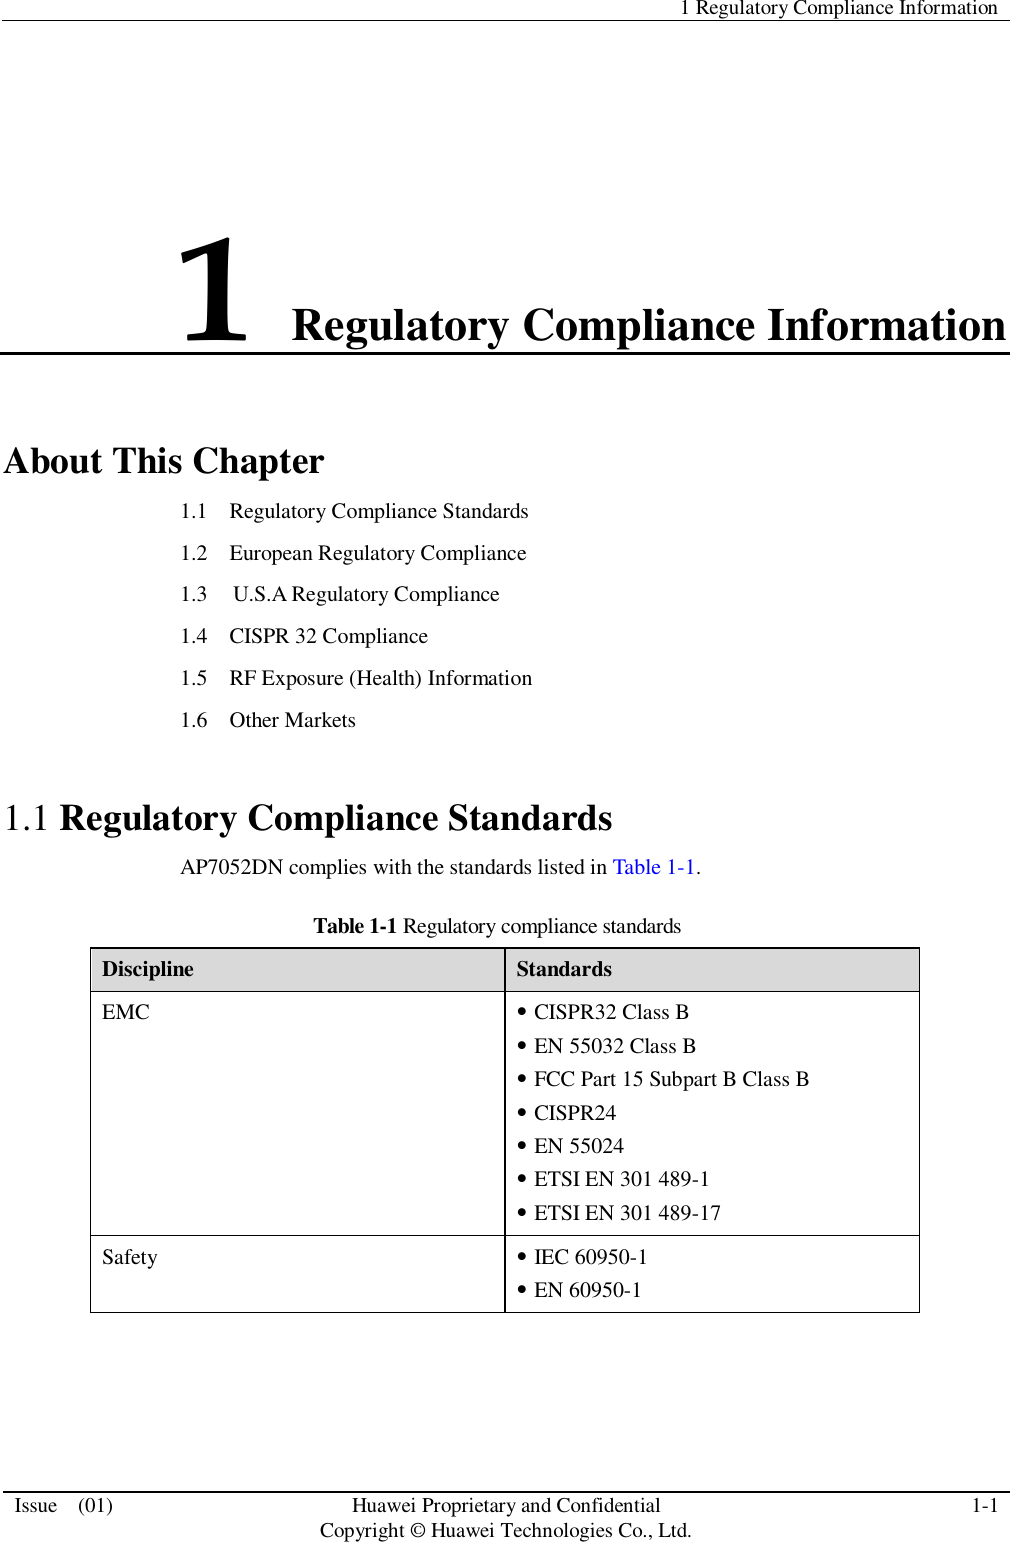   1 Regulatory Compliance Information  Issue    (01) Huawei Proprietary and Confidential                                     Copyright © Huawei Technologies Co., Ltd. 1-1  1 Regulatory Compliance Information About This Chapter 1.1    Regulatory Compliance Standards 1.2    European Regulatory Compliance 1.3    U.S.A Regulatory Compliance 1.4  CISPR 32 Compliance 1.5    RF Exposure (Health) Information 1.6  Other Markets 1.1 Regulatory Compliance Standards AP7052DN complies with the standards listed in Table 1-1. Table 1-1 Regulatory compliance standards Discipline Standards EMC  CISPR32 Class B  EN 55032 Class B  FCC Part 15 Subpart B Class B  CISPR24  EN 55024  ETSI EN 301 489-1    ETSI EN 301 489-17 Safety  IEC 60950-1  EN 60950-1 